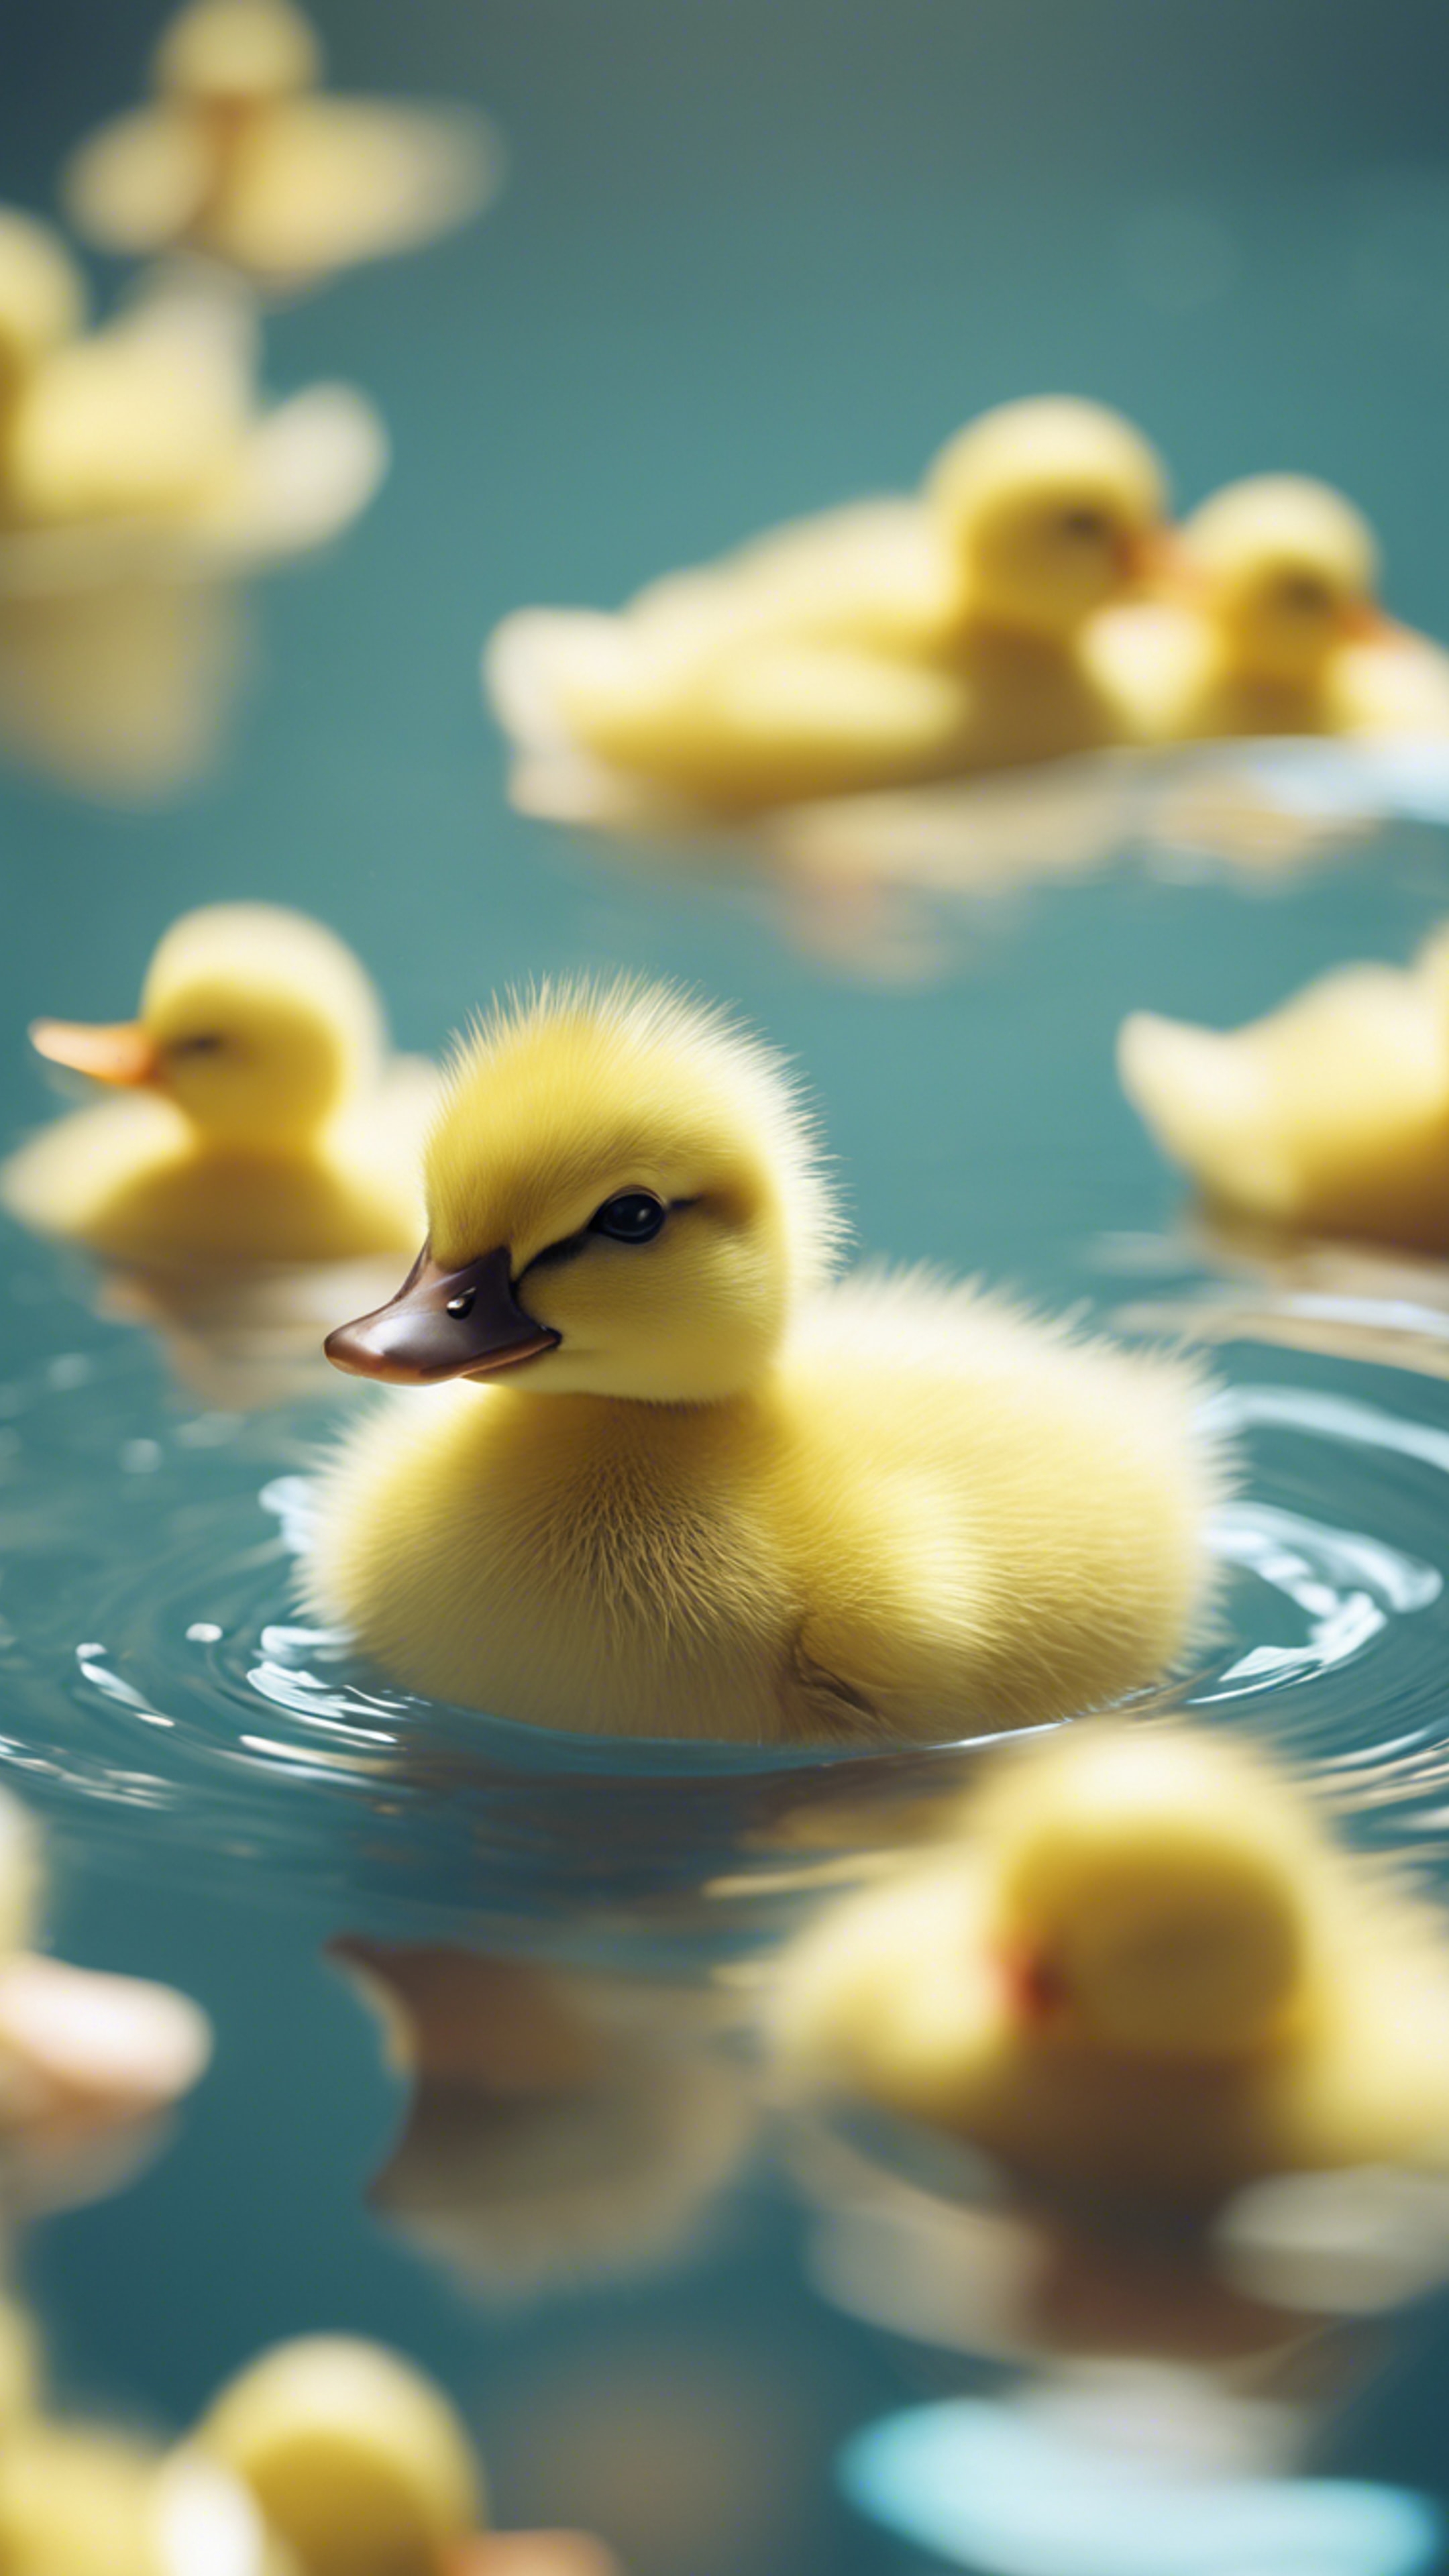 A small, chubby, kawaii yellow duckling swimming in a pastel blue pond. ផ្ទាំង​រូបភាព[2b07b187d2cc4e759cc9]